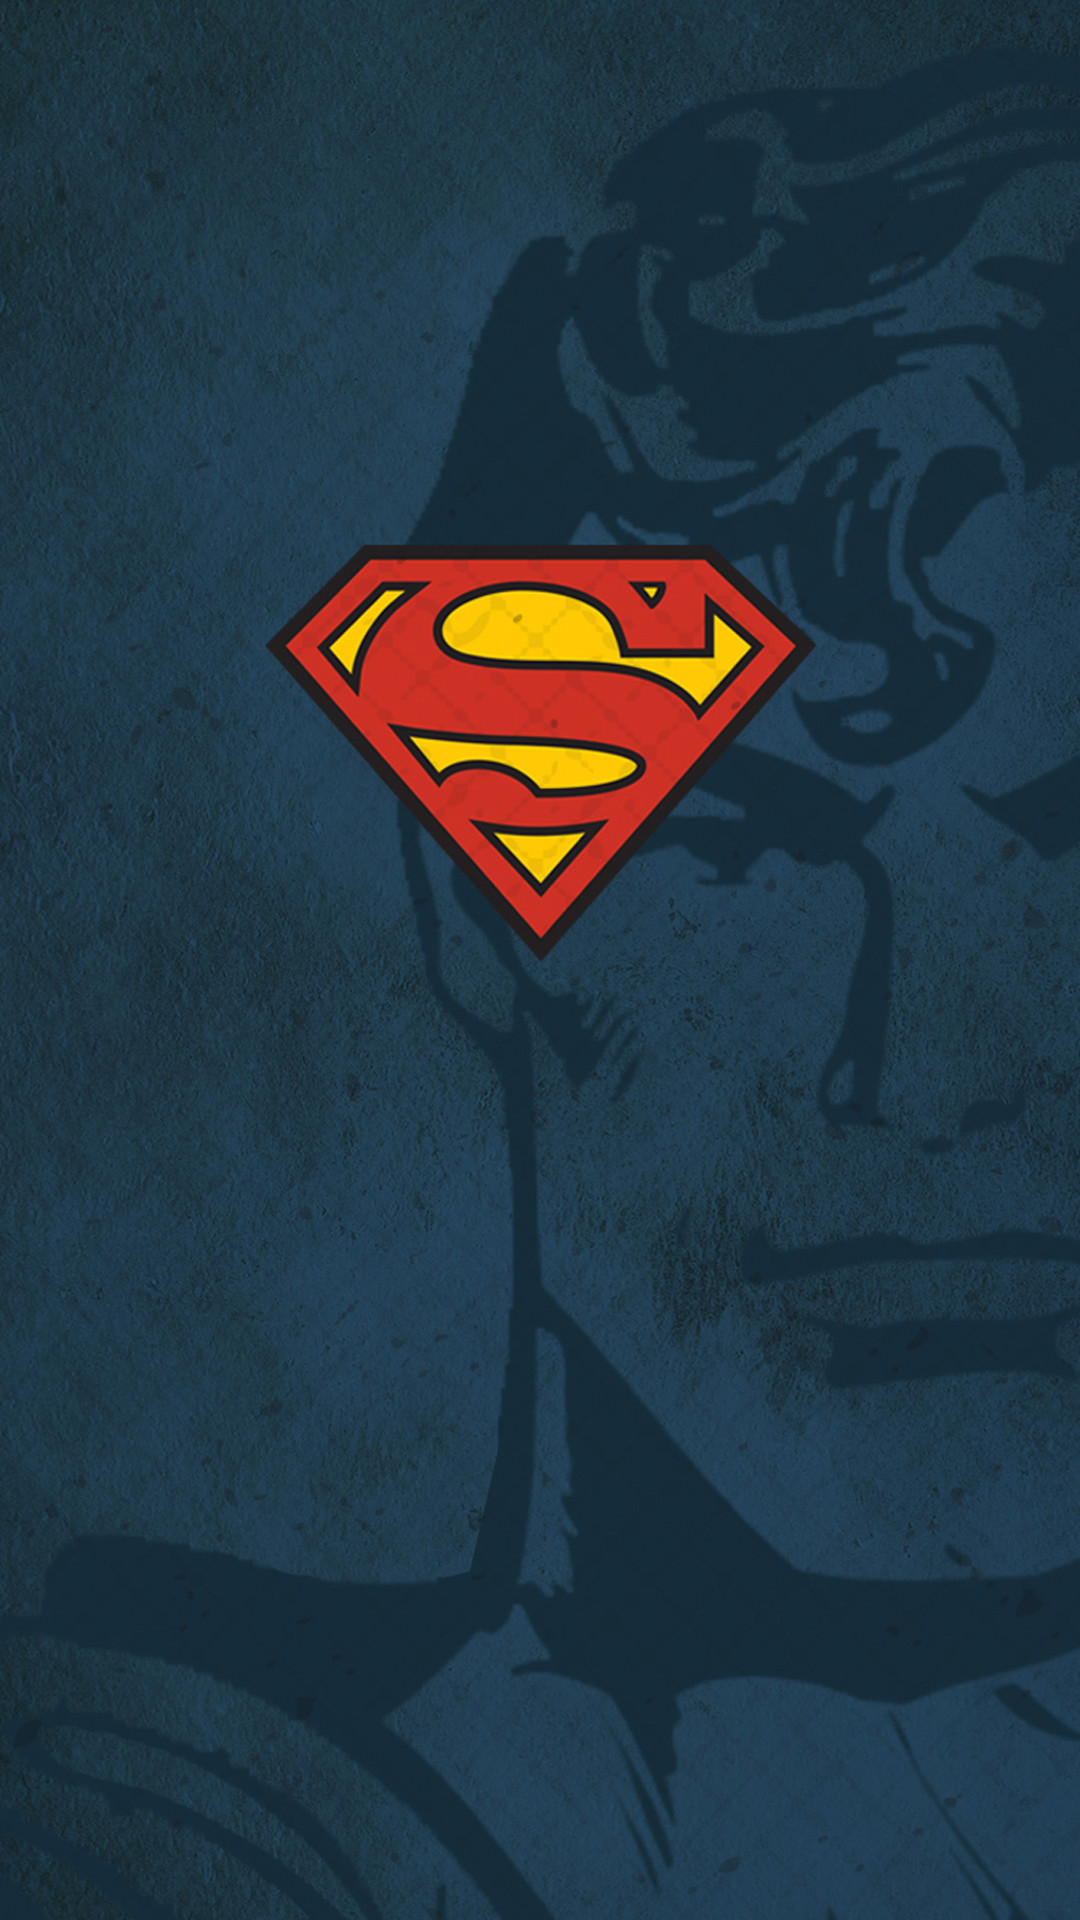 free superman logo ipad photo hd wallpapers background photos rh